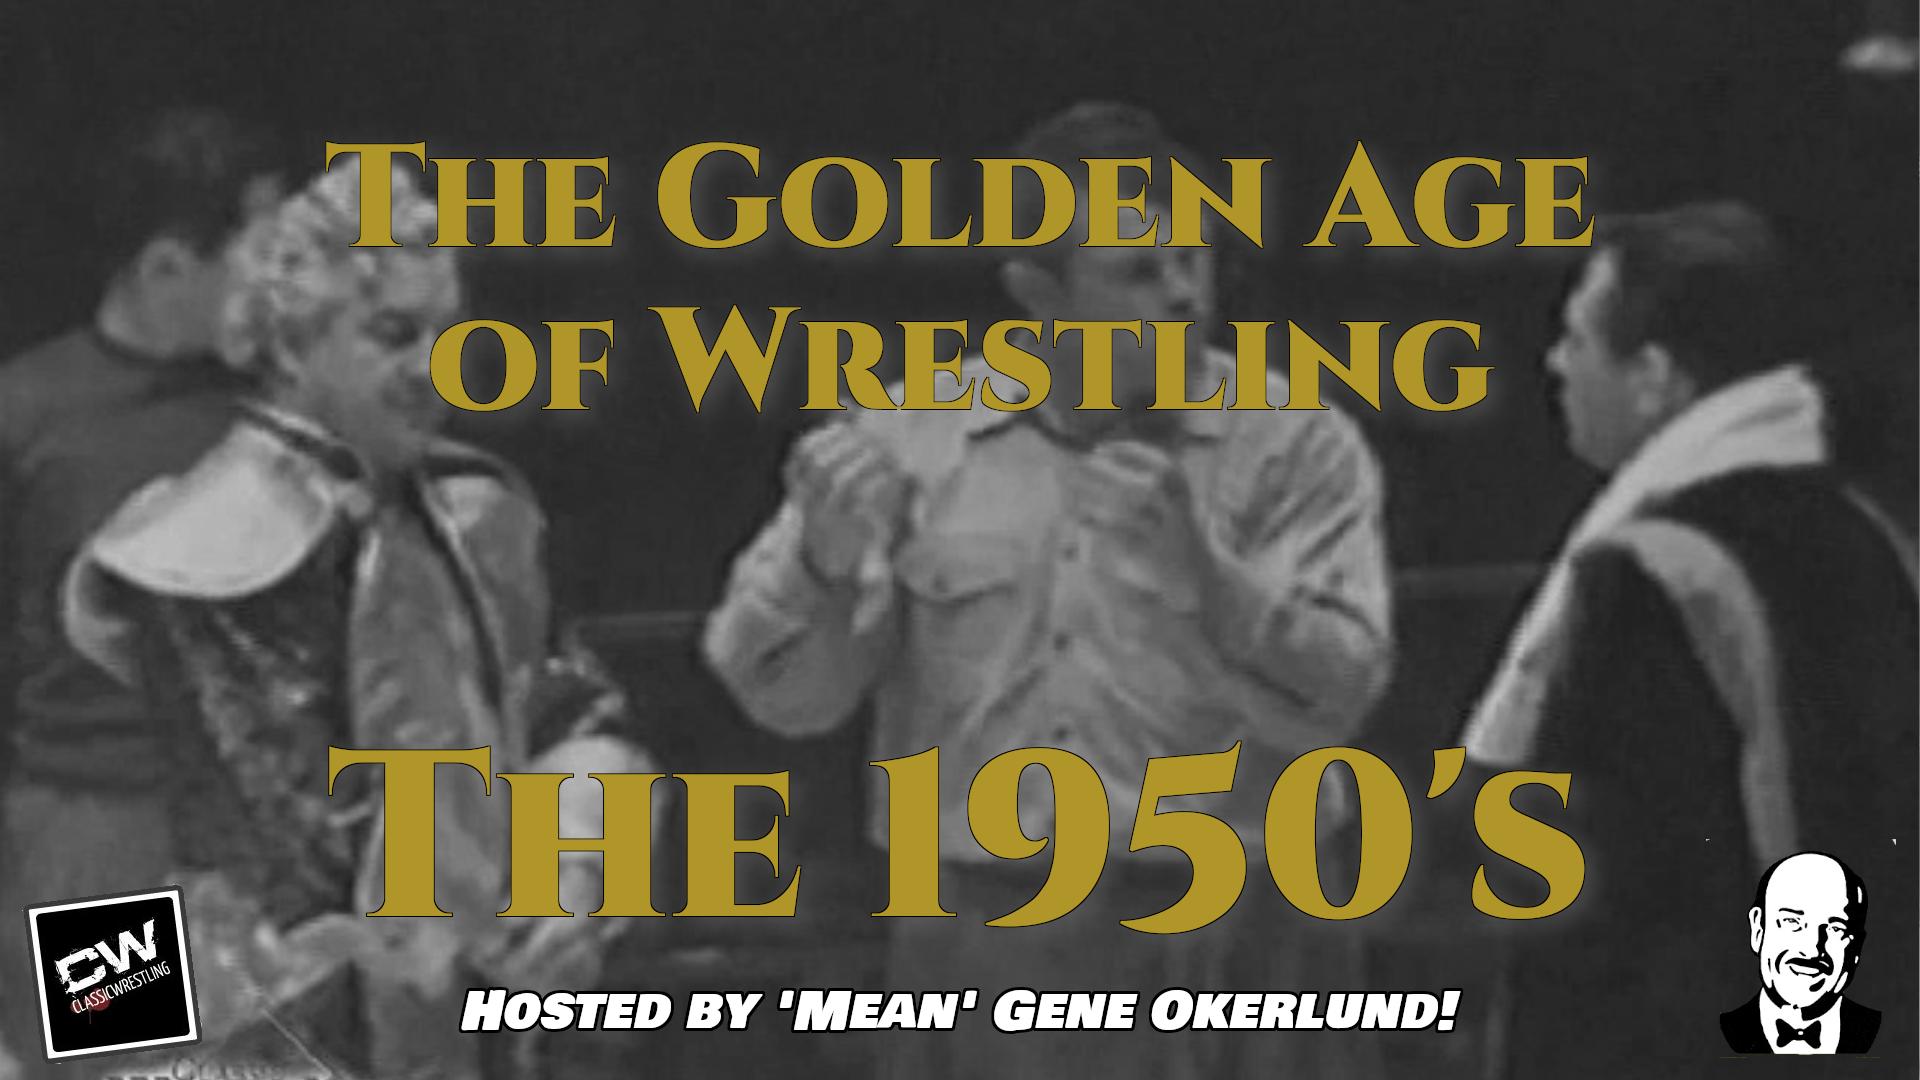 The Golden Age of Wrestling (2013)